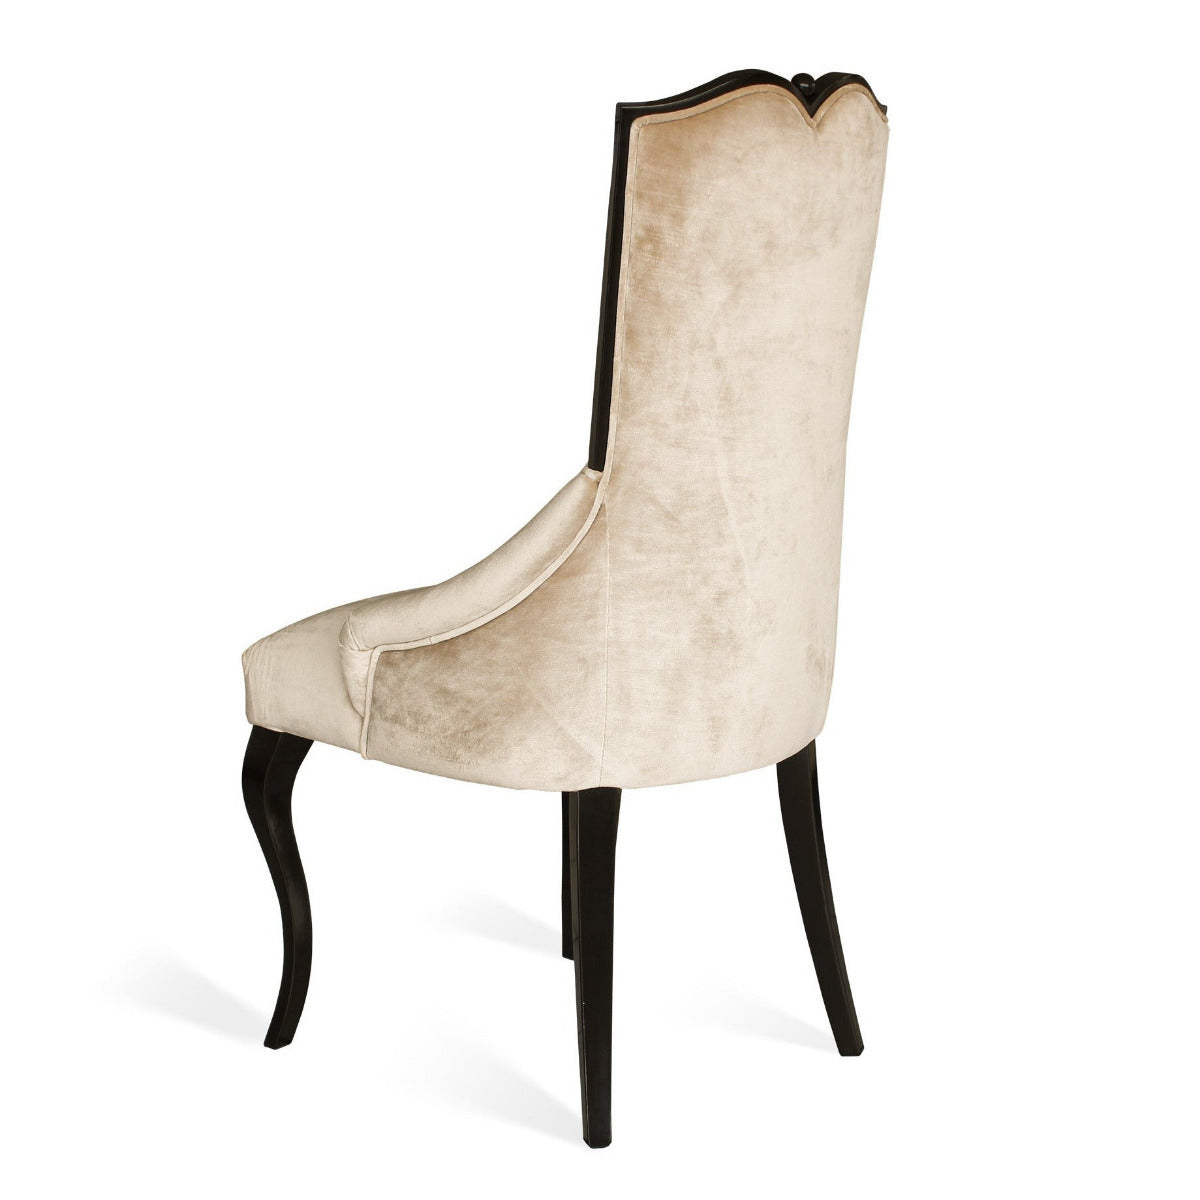 Carver high back dining chair or armchair